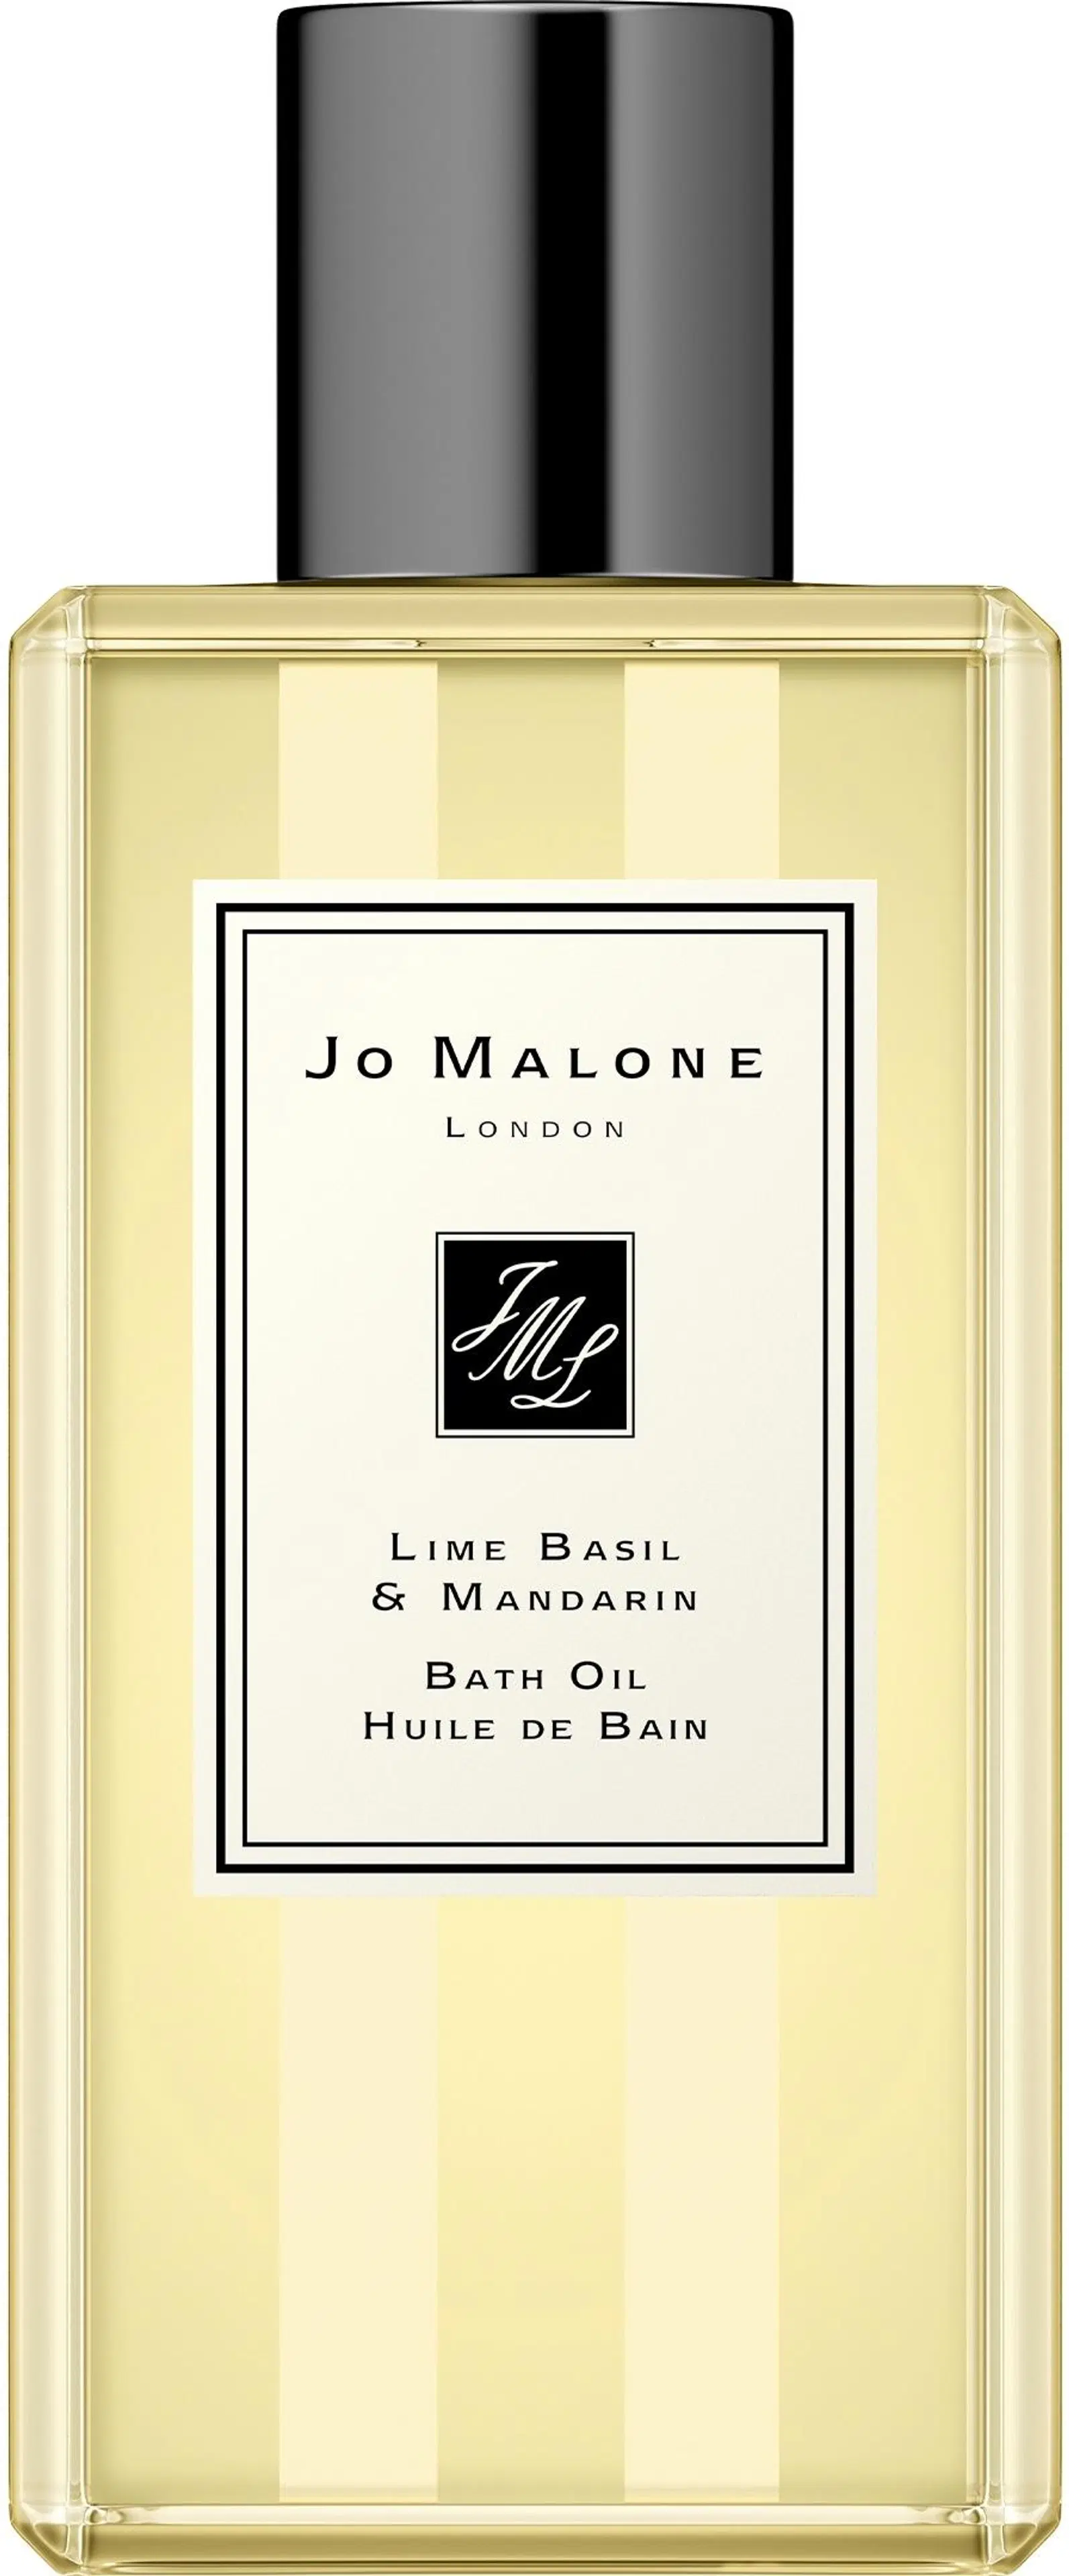 Jo Malone London Lime Basil & Mandarin Bath Oil kylpyöljy 250 ml